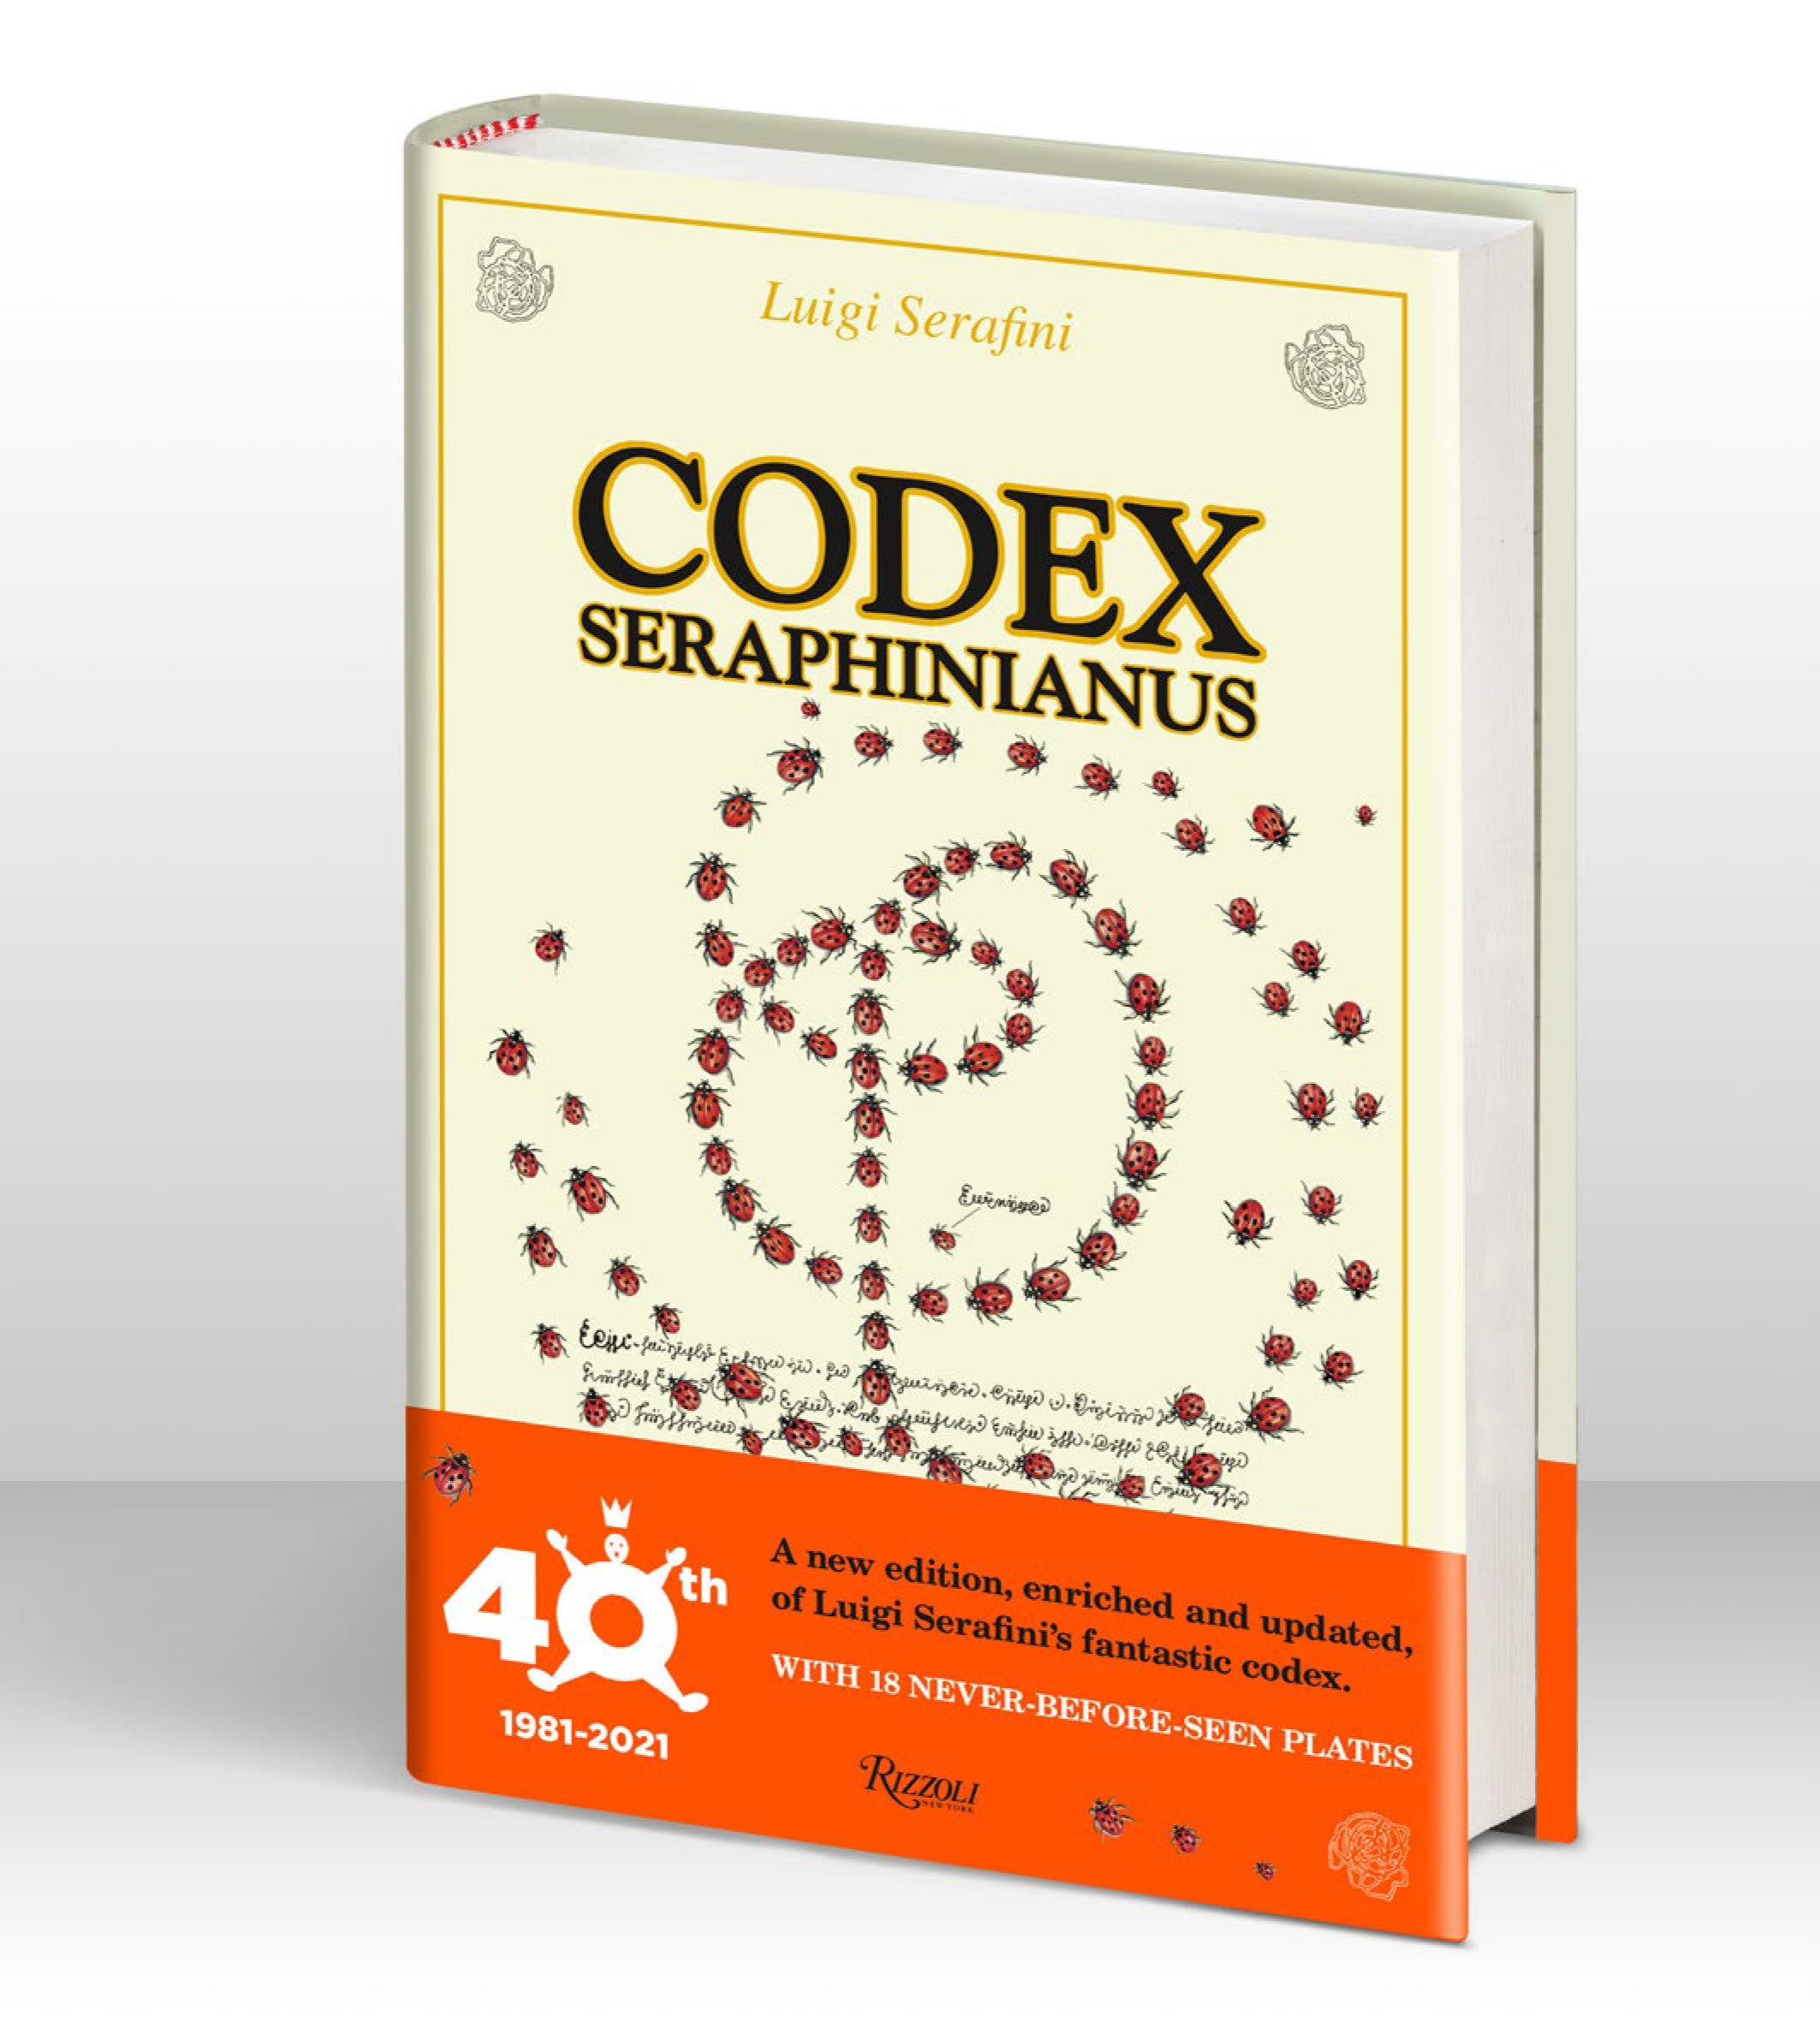 Serafini Luigi Codex Seraphinianus: 40th Anniversary Edition 